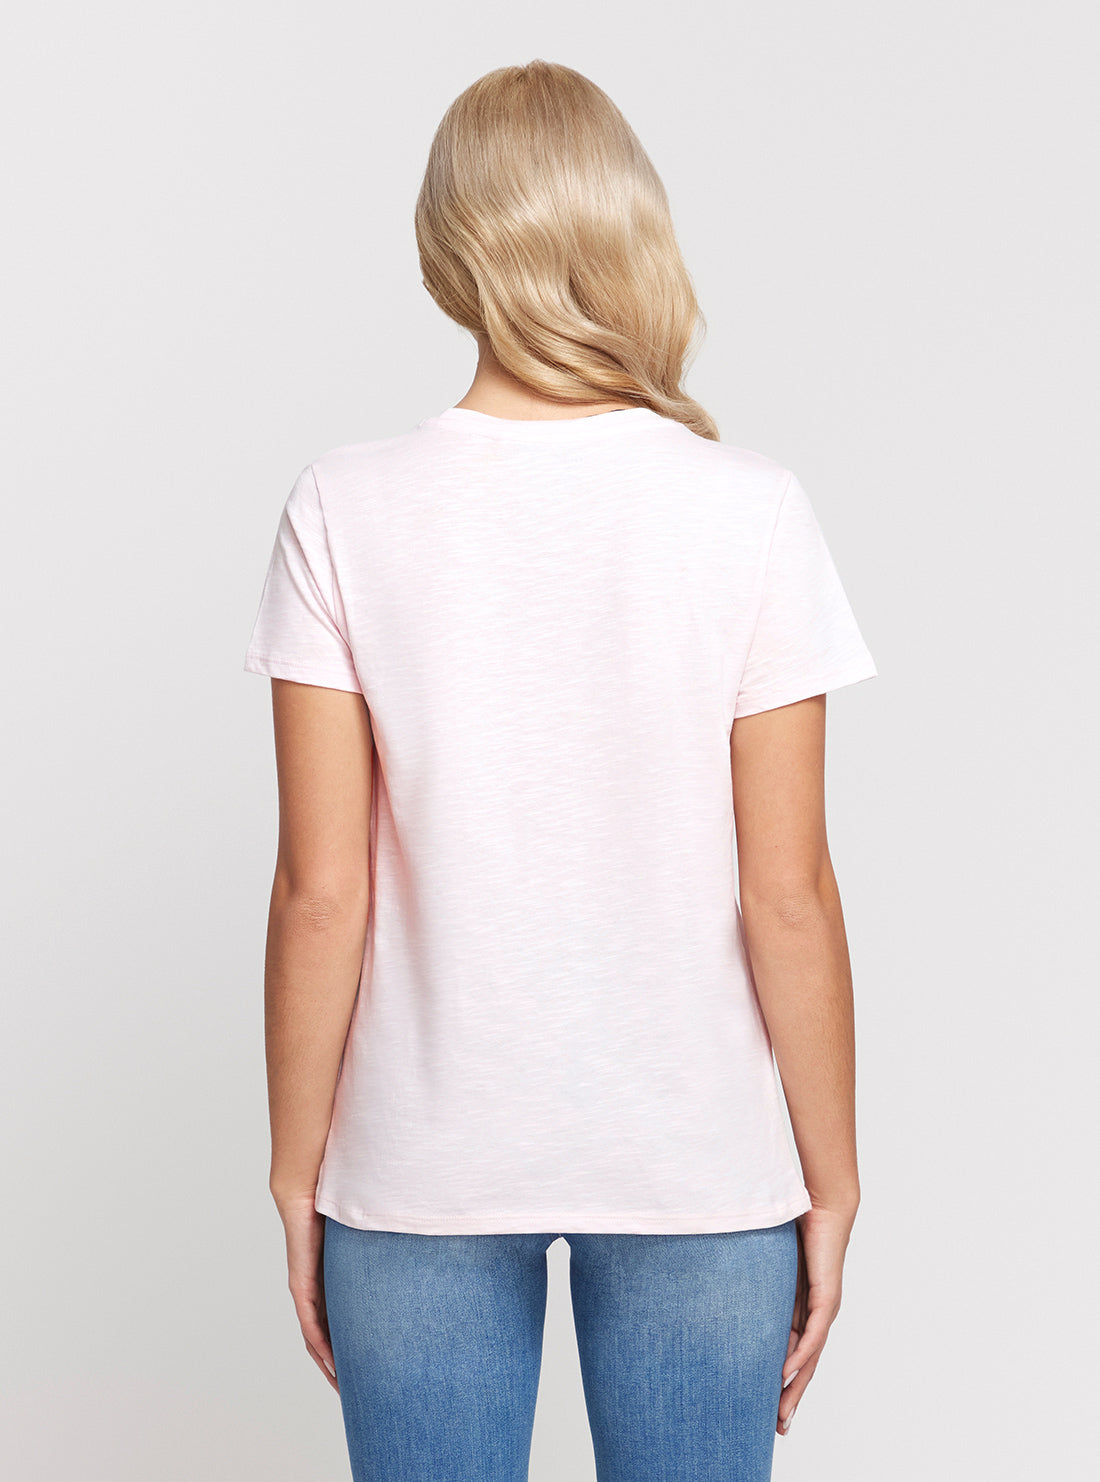 GUESS Eco Light Pink 1981 Crystal Logo T-Shirt back view